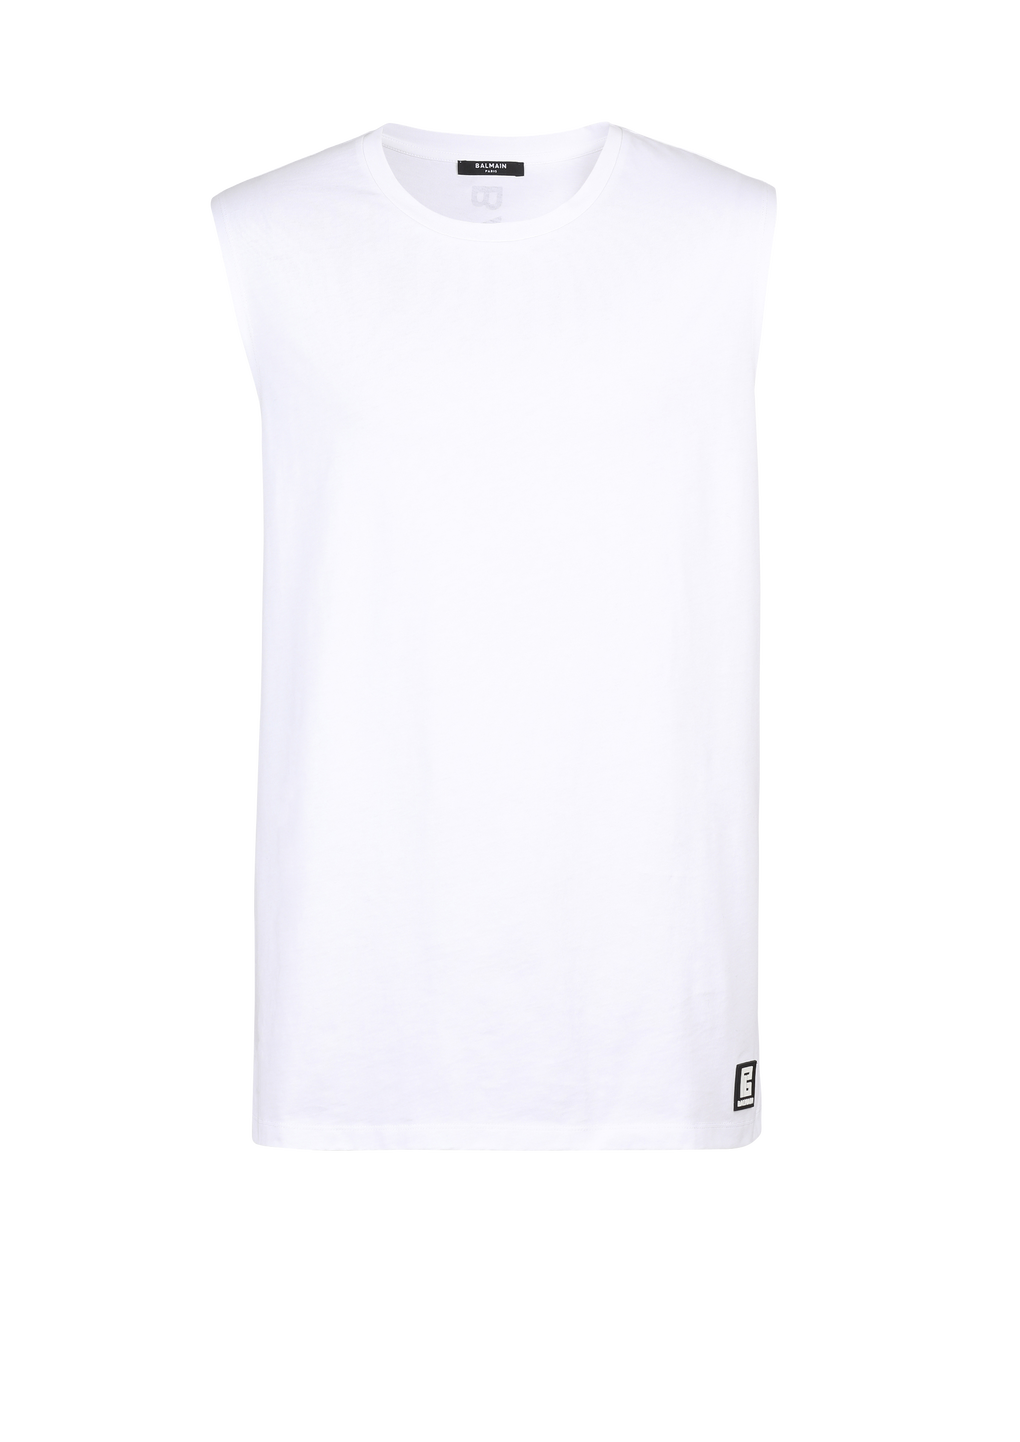 Cotton T-shirt with Balmain logo print, white, hi-res